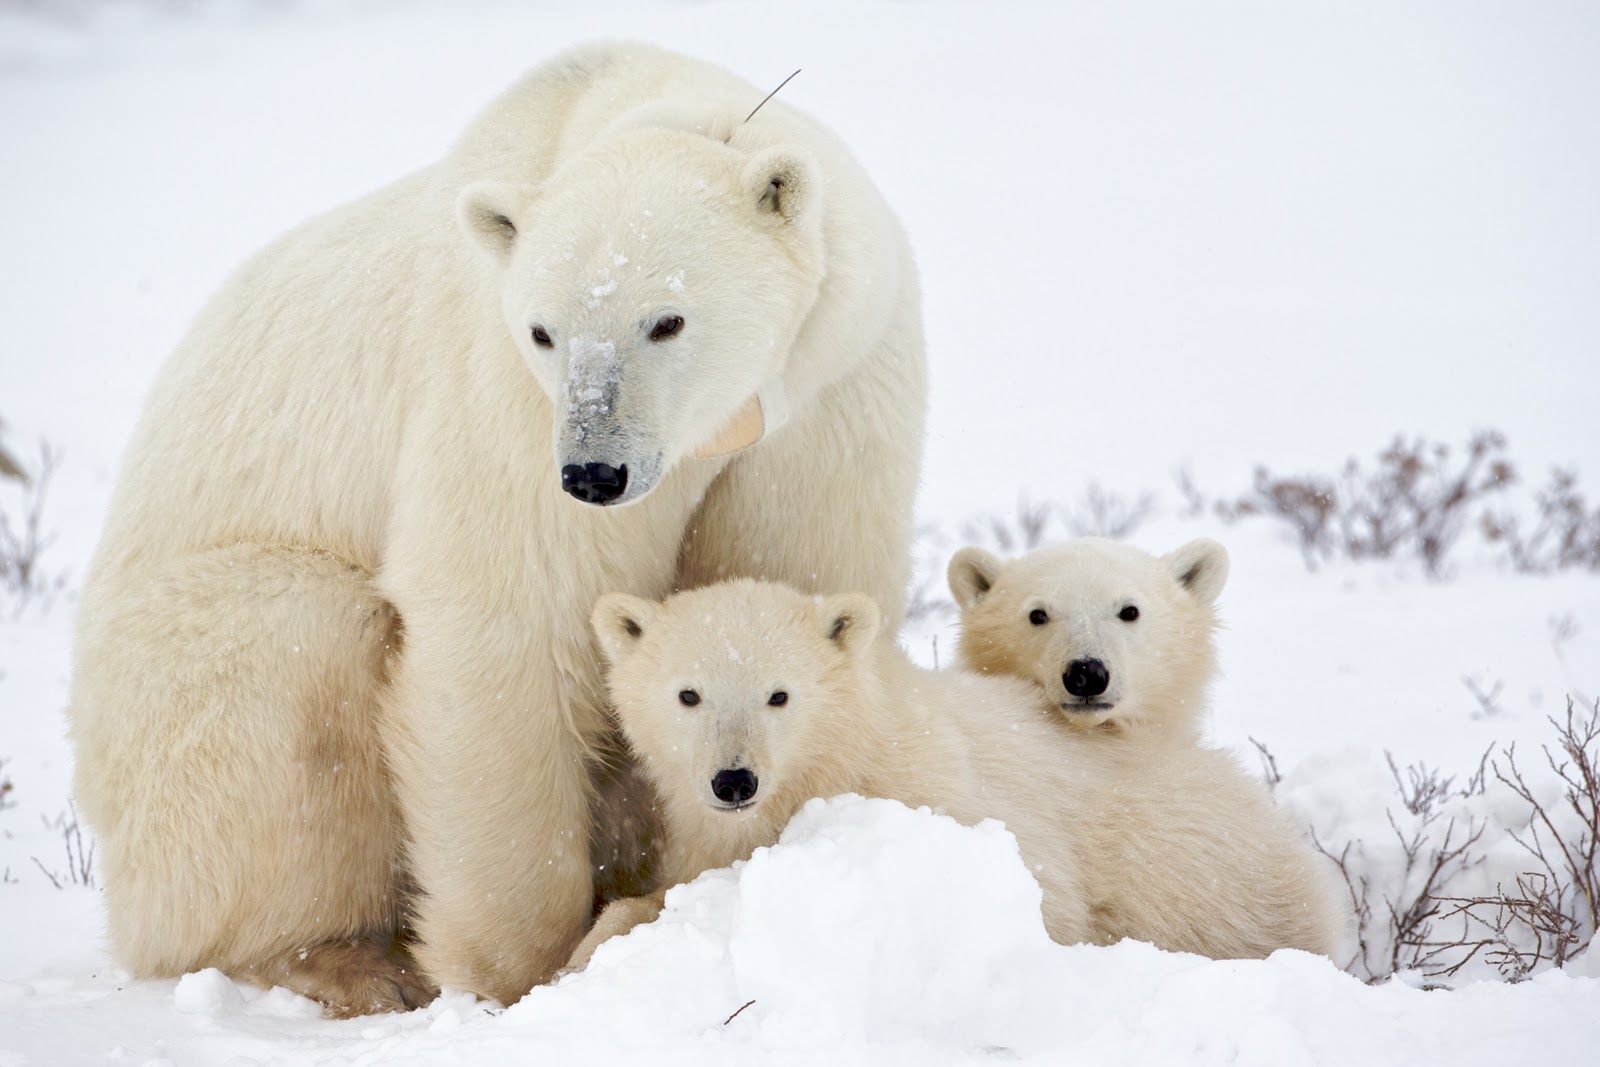  save the arctic,  save the arctic greenpeace, greenpeace  save the arctic, shell to drill in arctic, shell drill arctic, shell oil and gas arctic june 2015, polar bear save the arctic